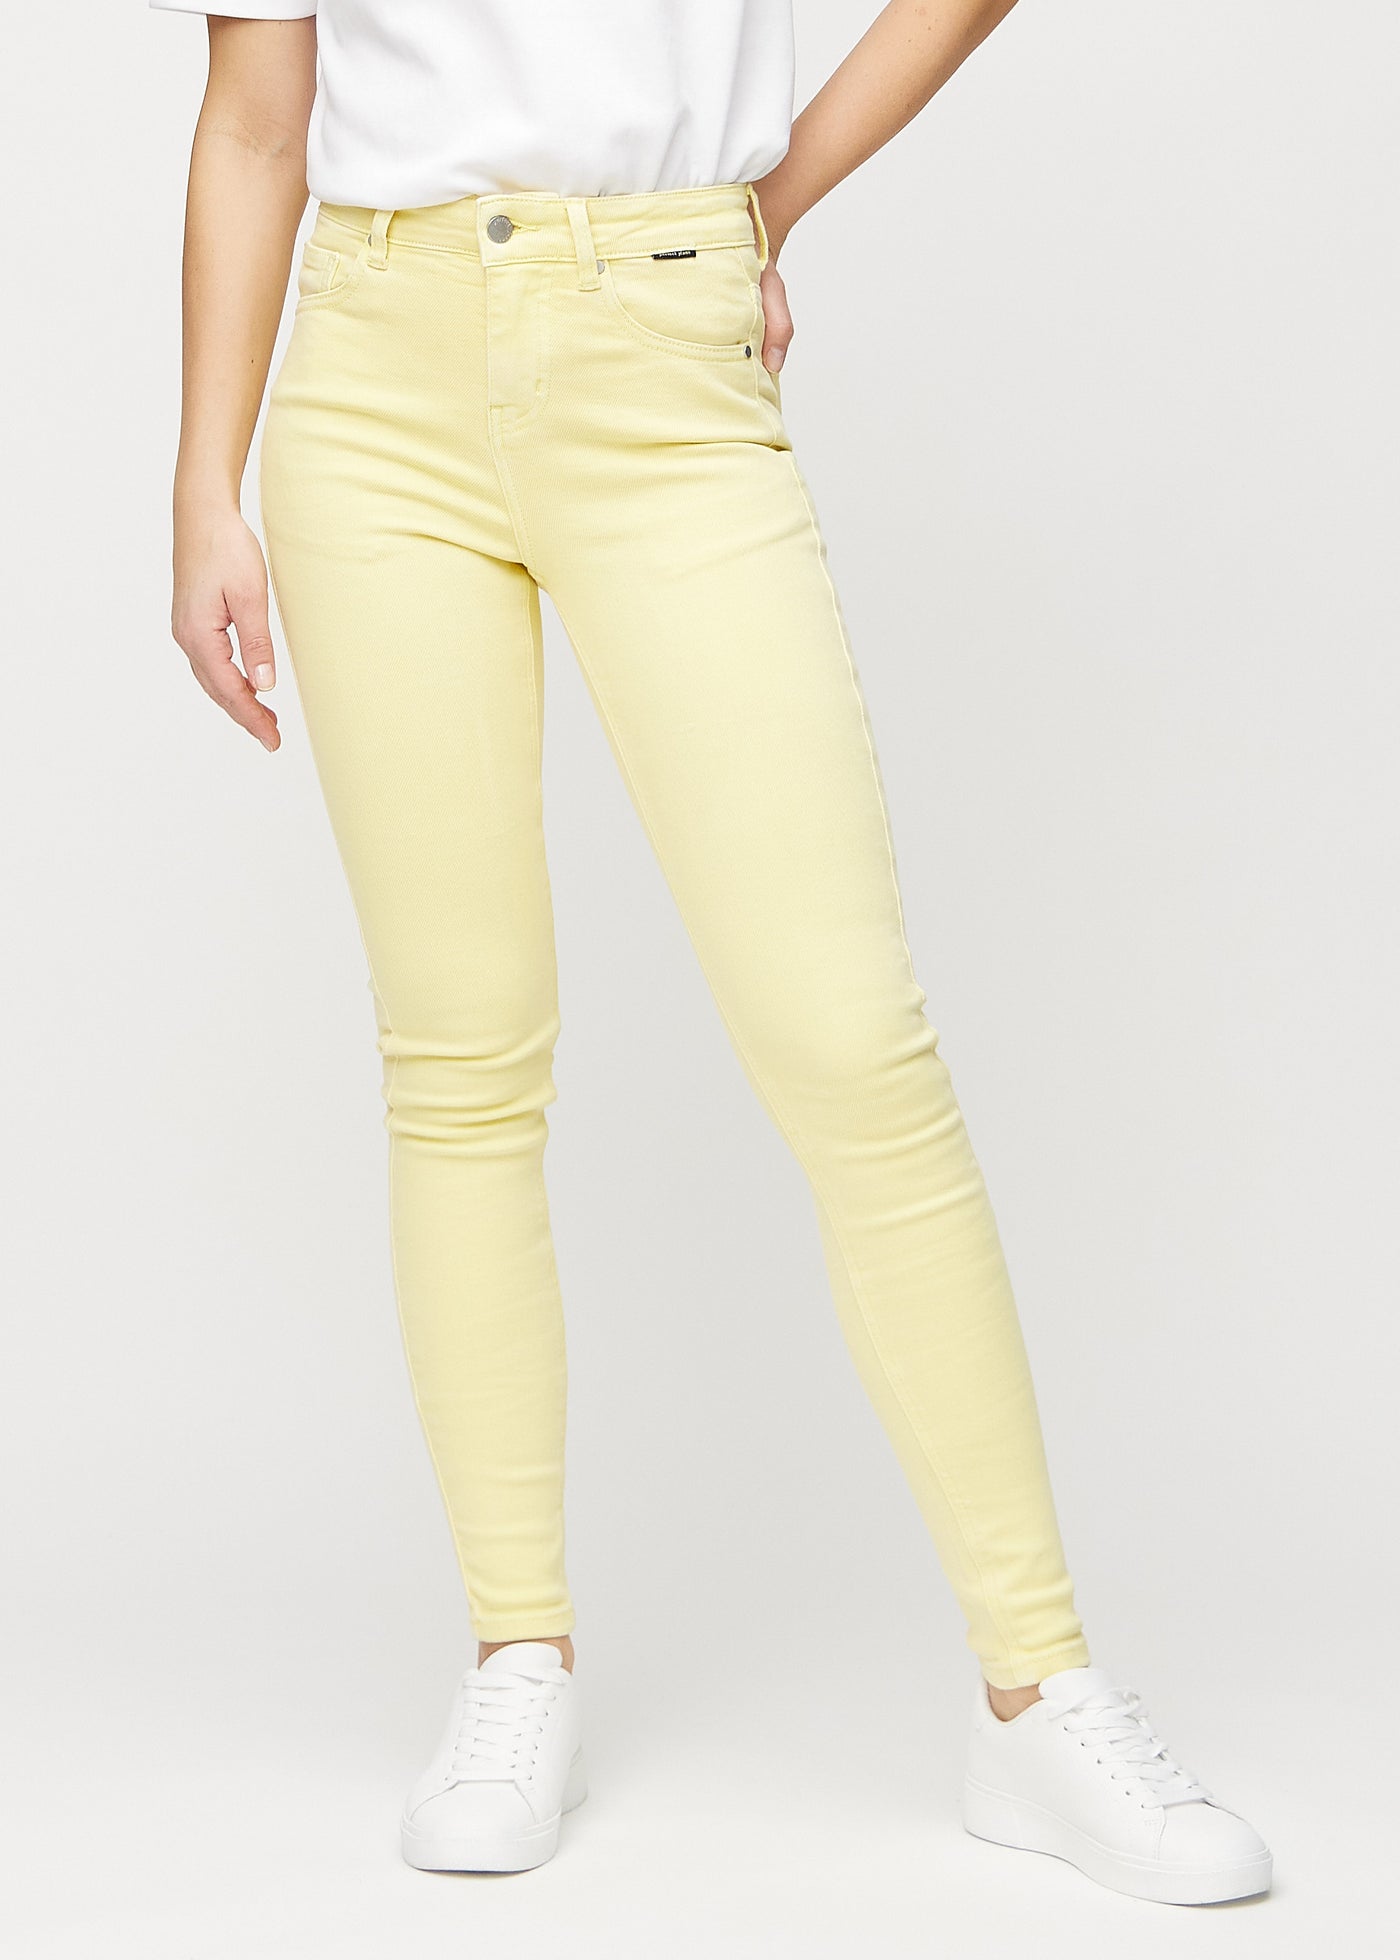 Perfect Jeans - Skinny - Lemonades™